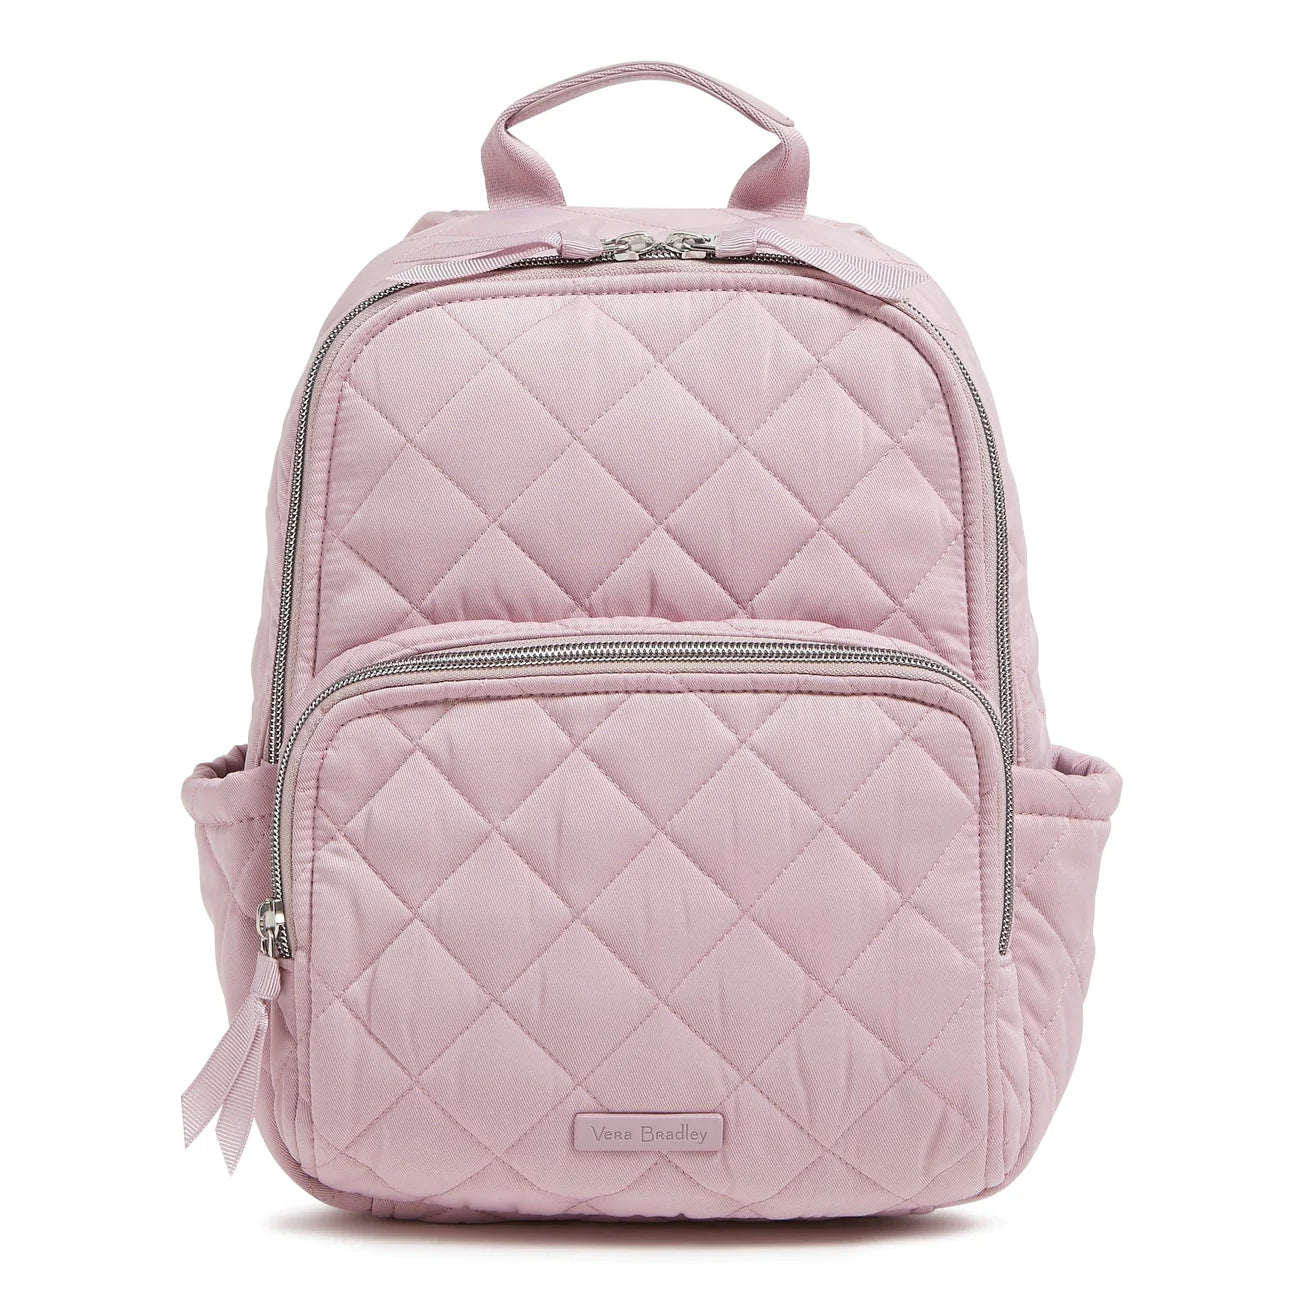 Vera Bradley Small Backpack : Hydrangea Pink - Image 1